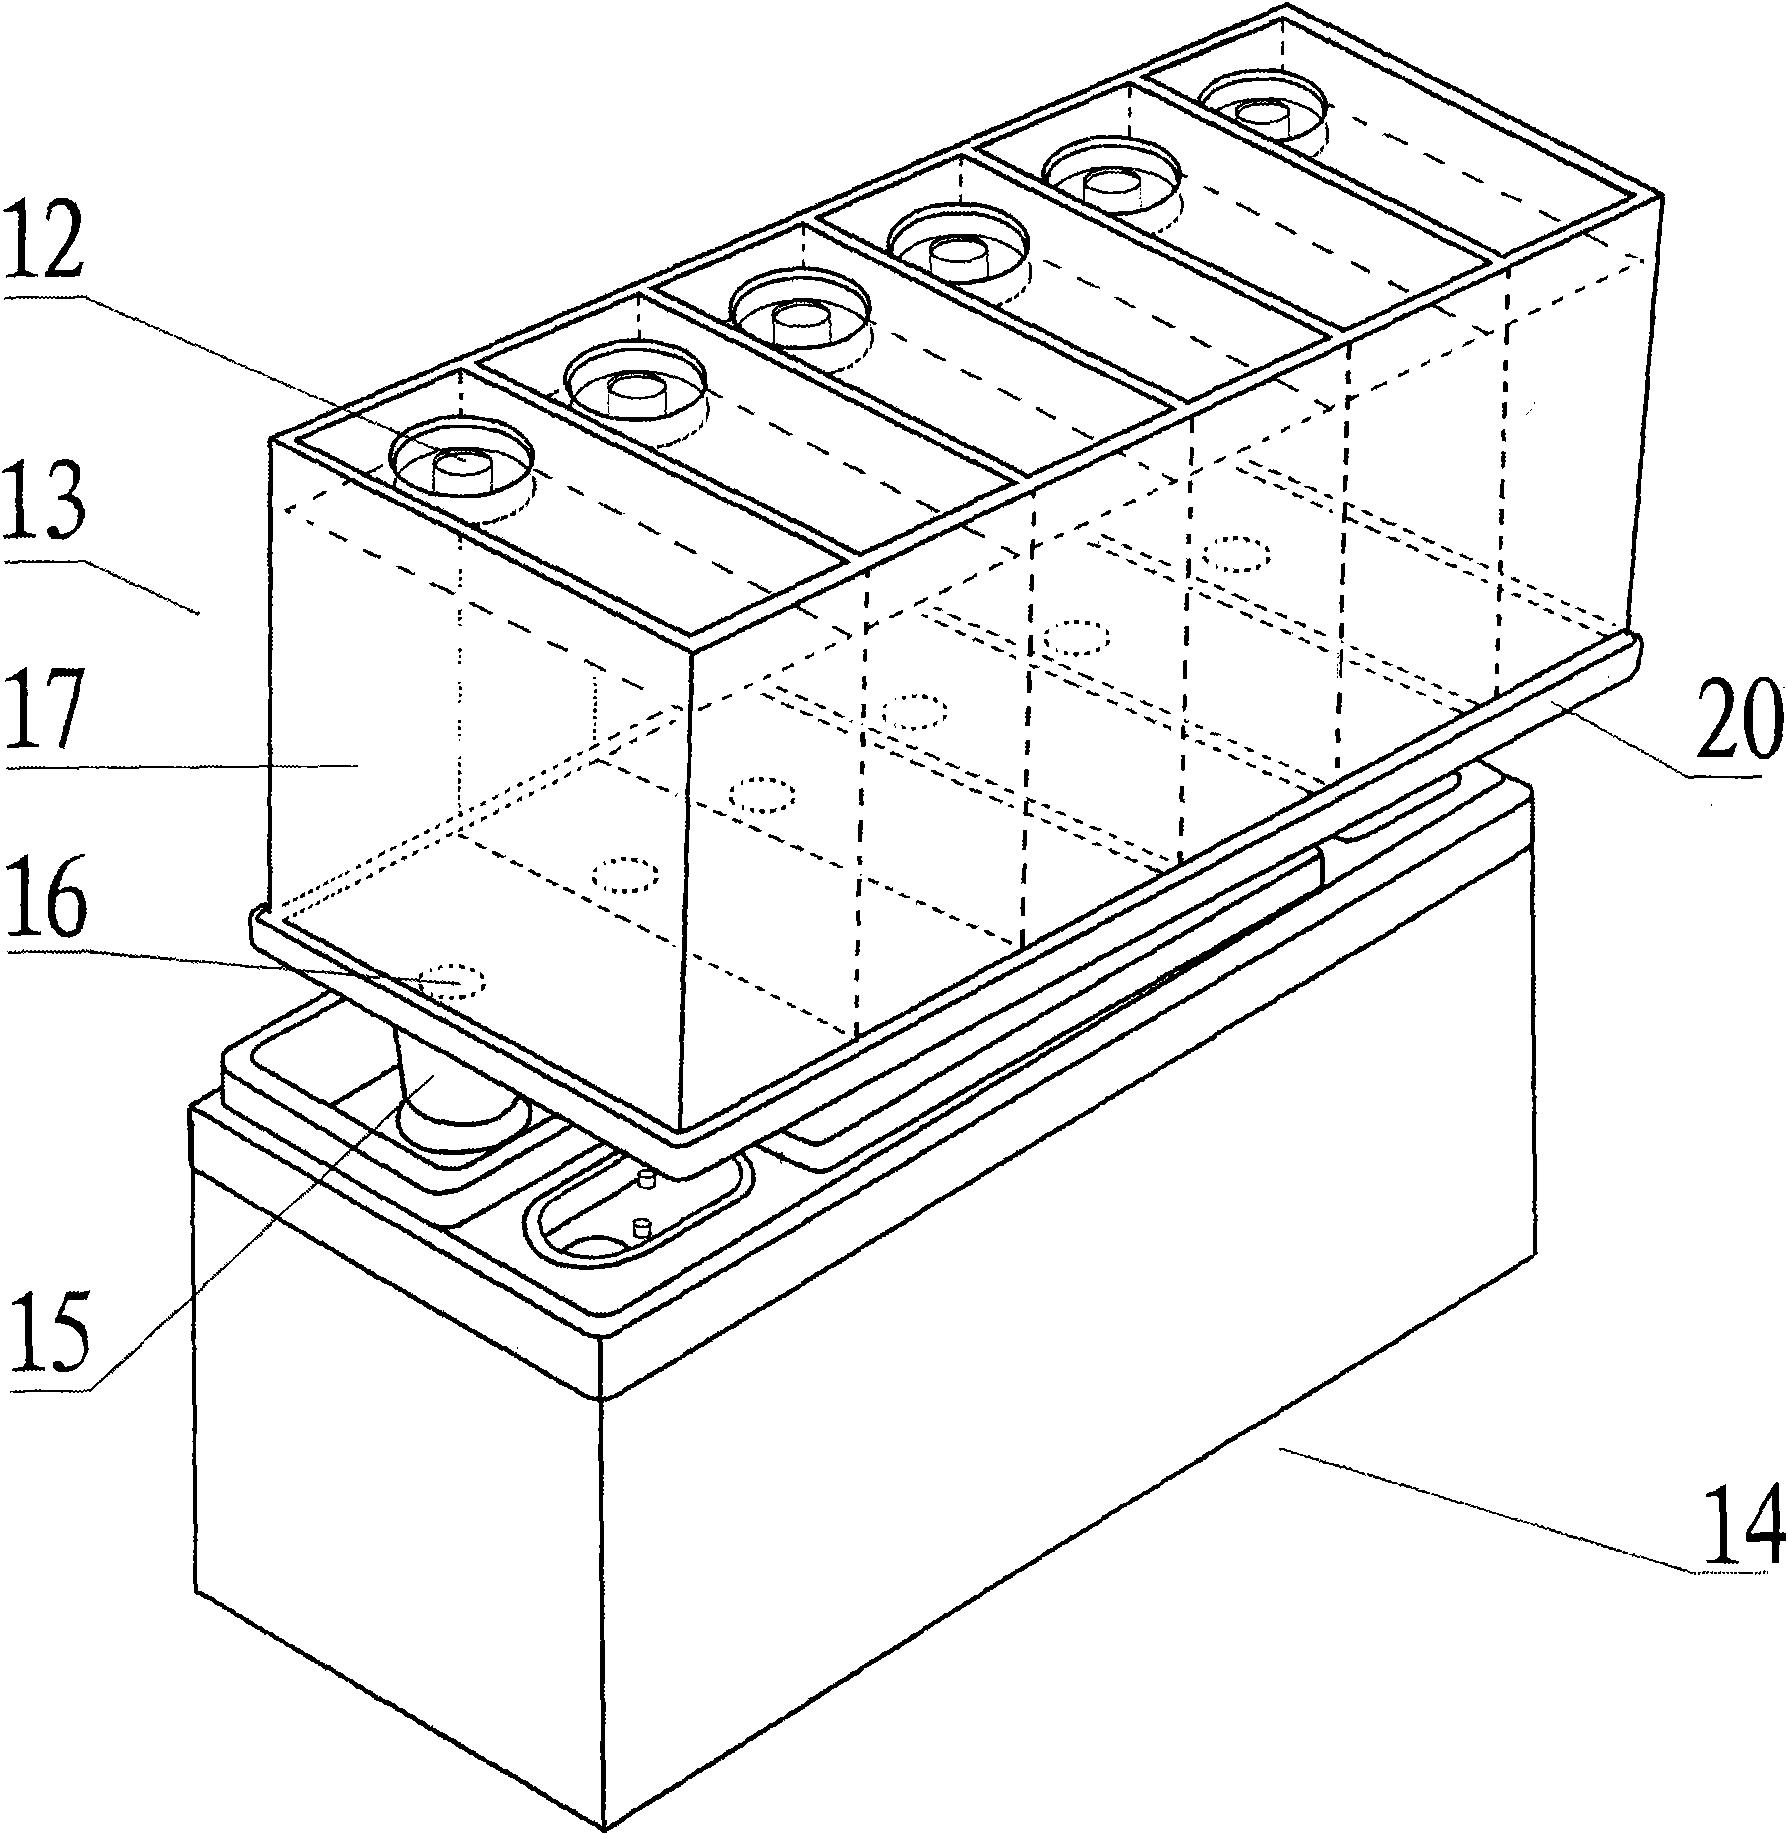 Formation liquid storage tank of quantitative acid dosing and charging of battery